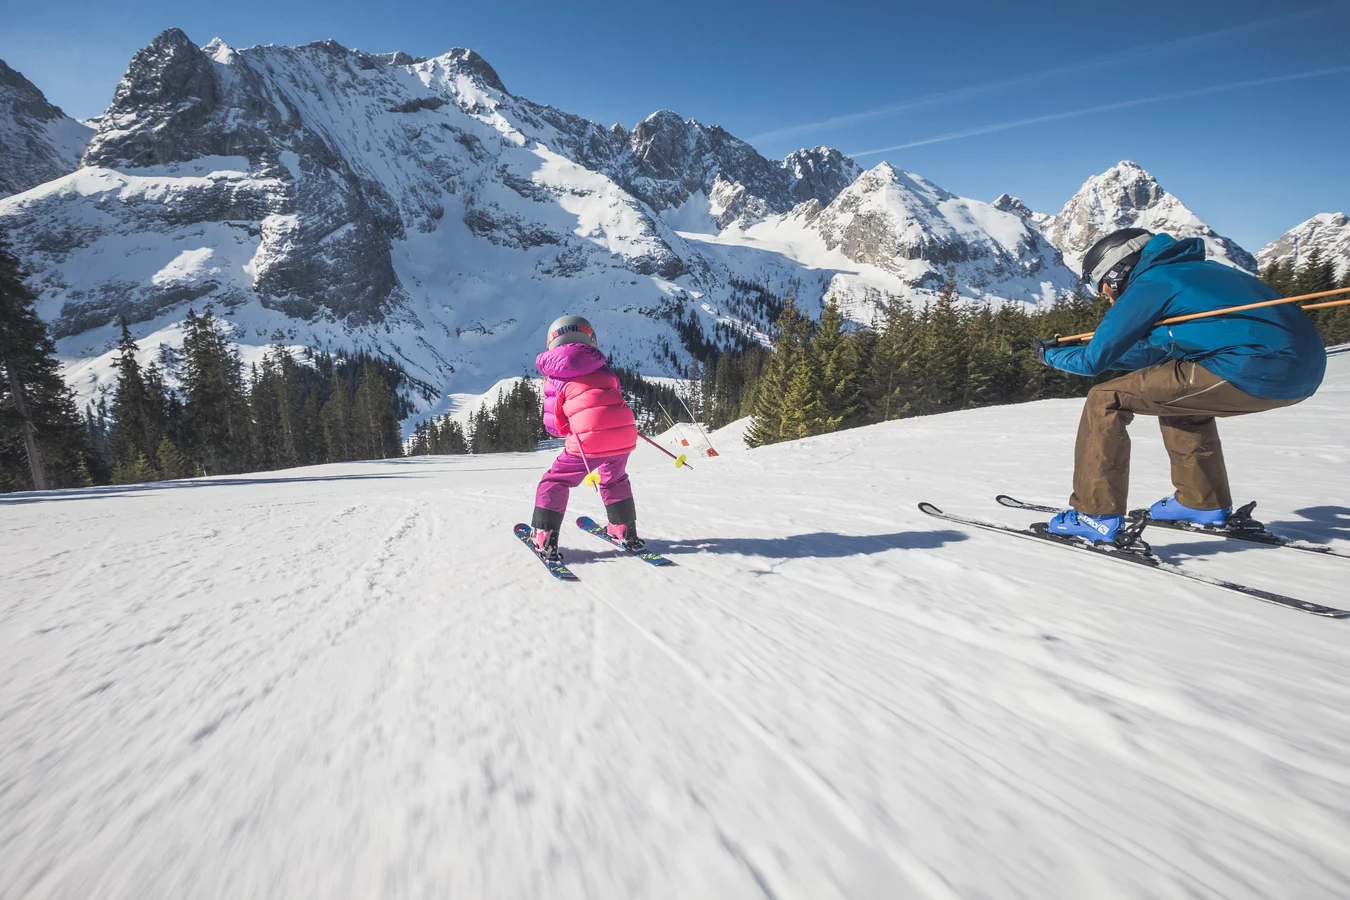  Zugspitz Ski Resort is one of the most magnificent ski resorts near Munich